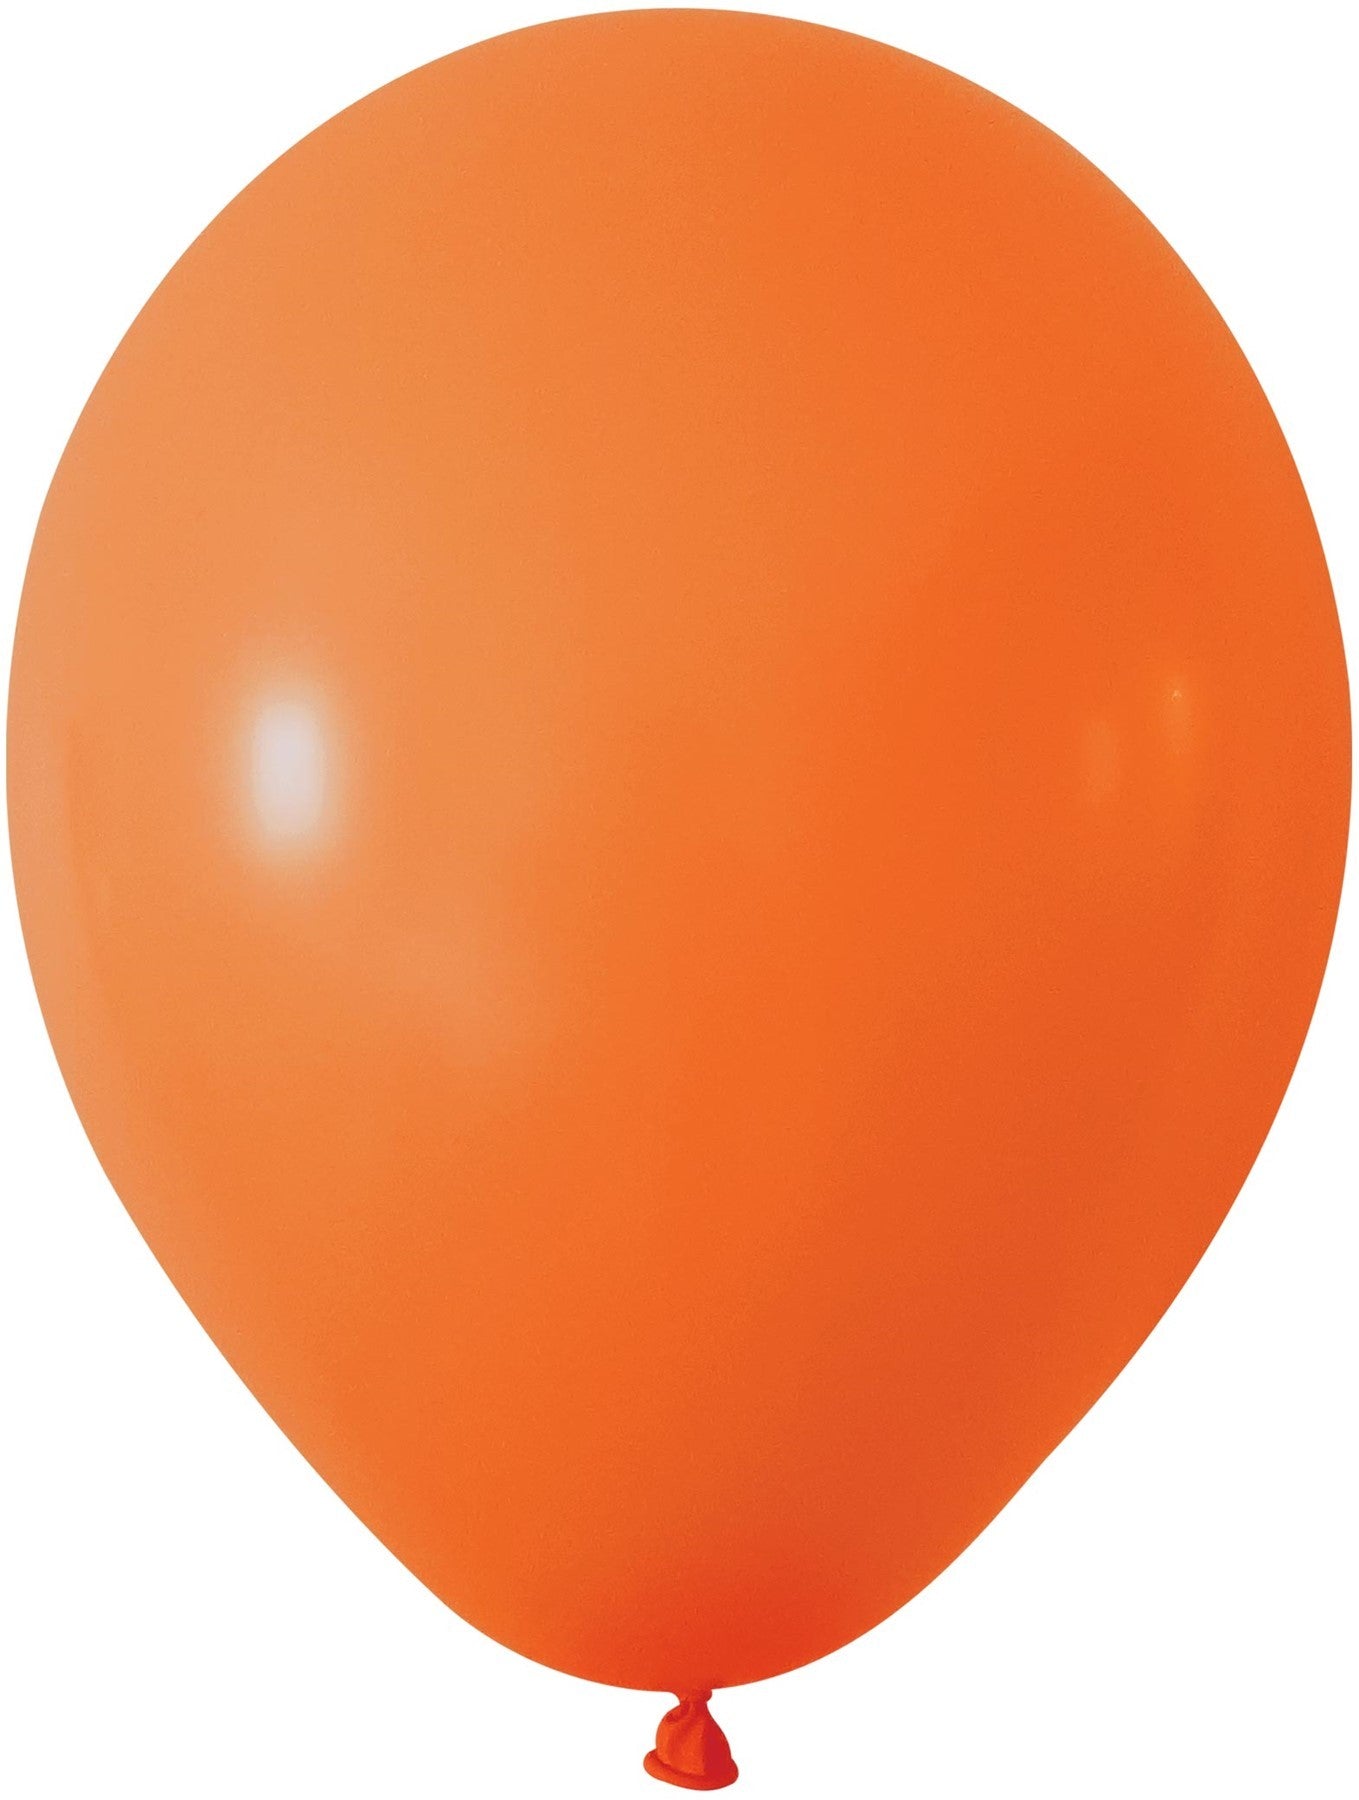 View Orange Latex Balloon 12 inch Pk 100 information